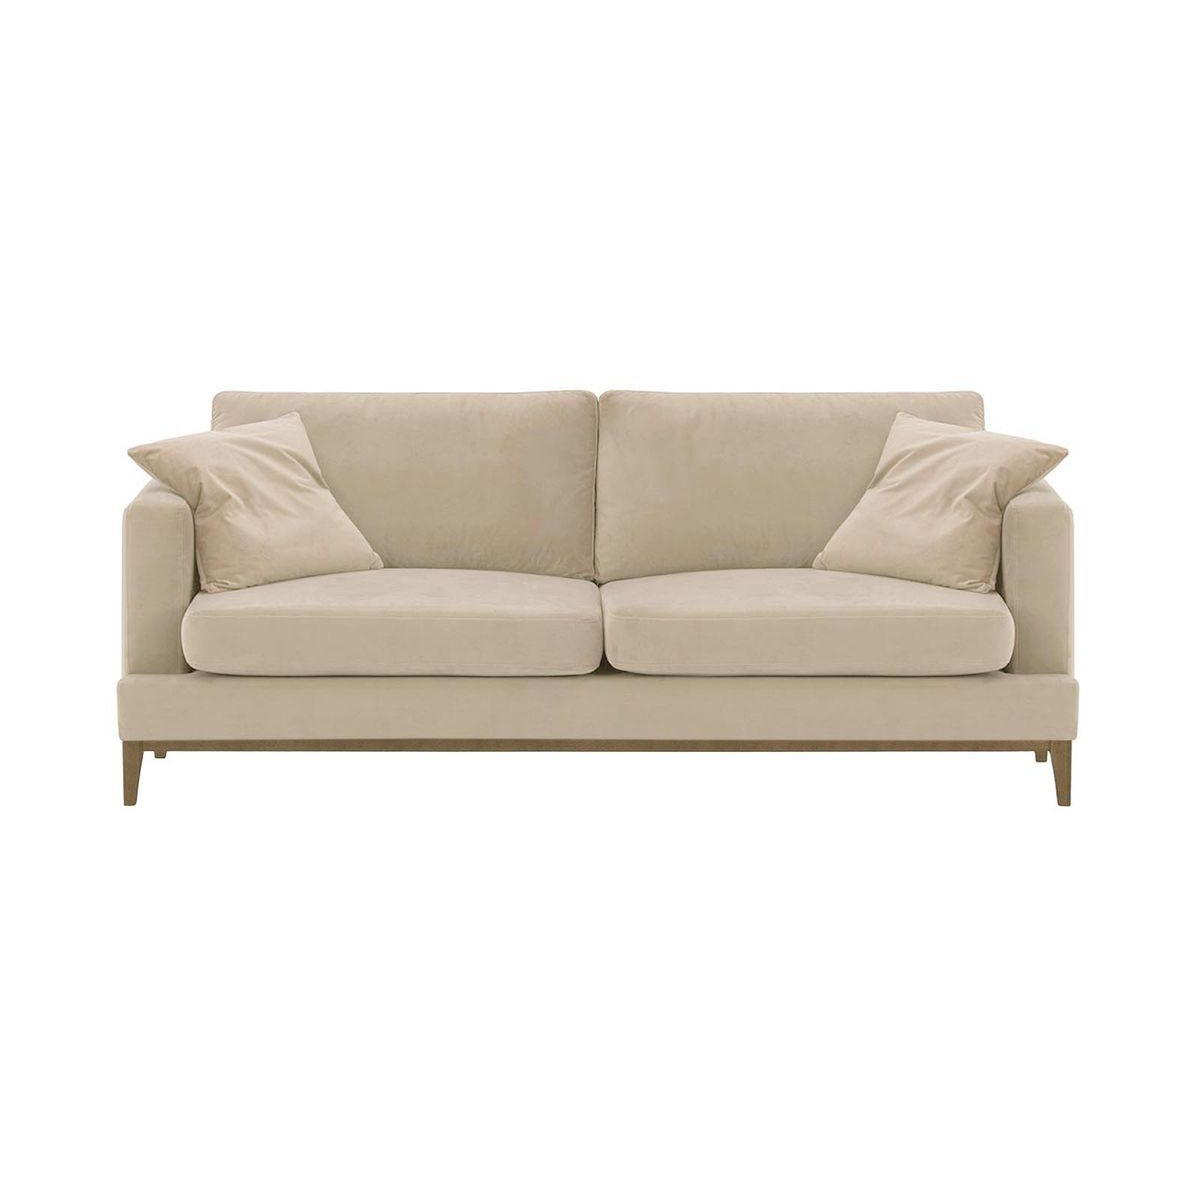 Covex Wood 3 Seater Sofa, light beige, Leg colour: wax black - image 1